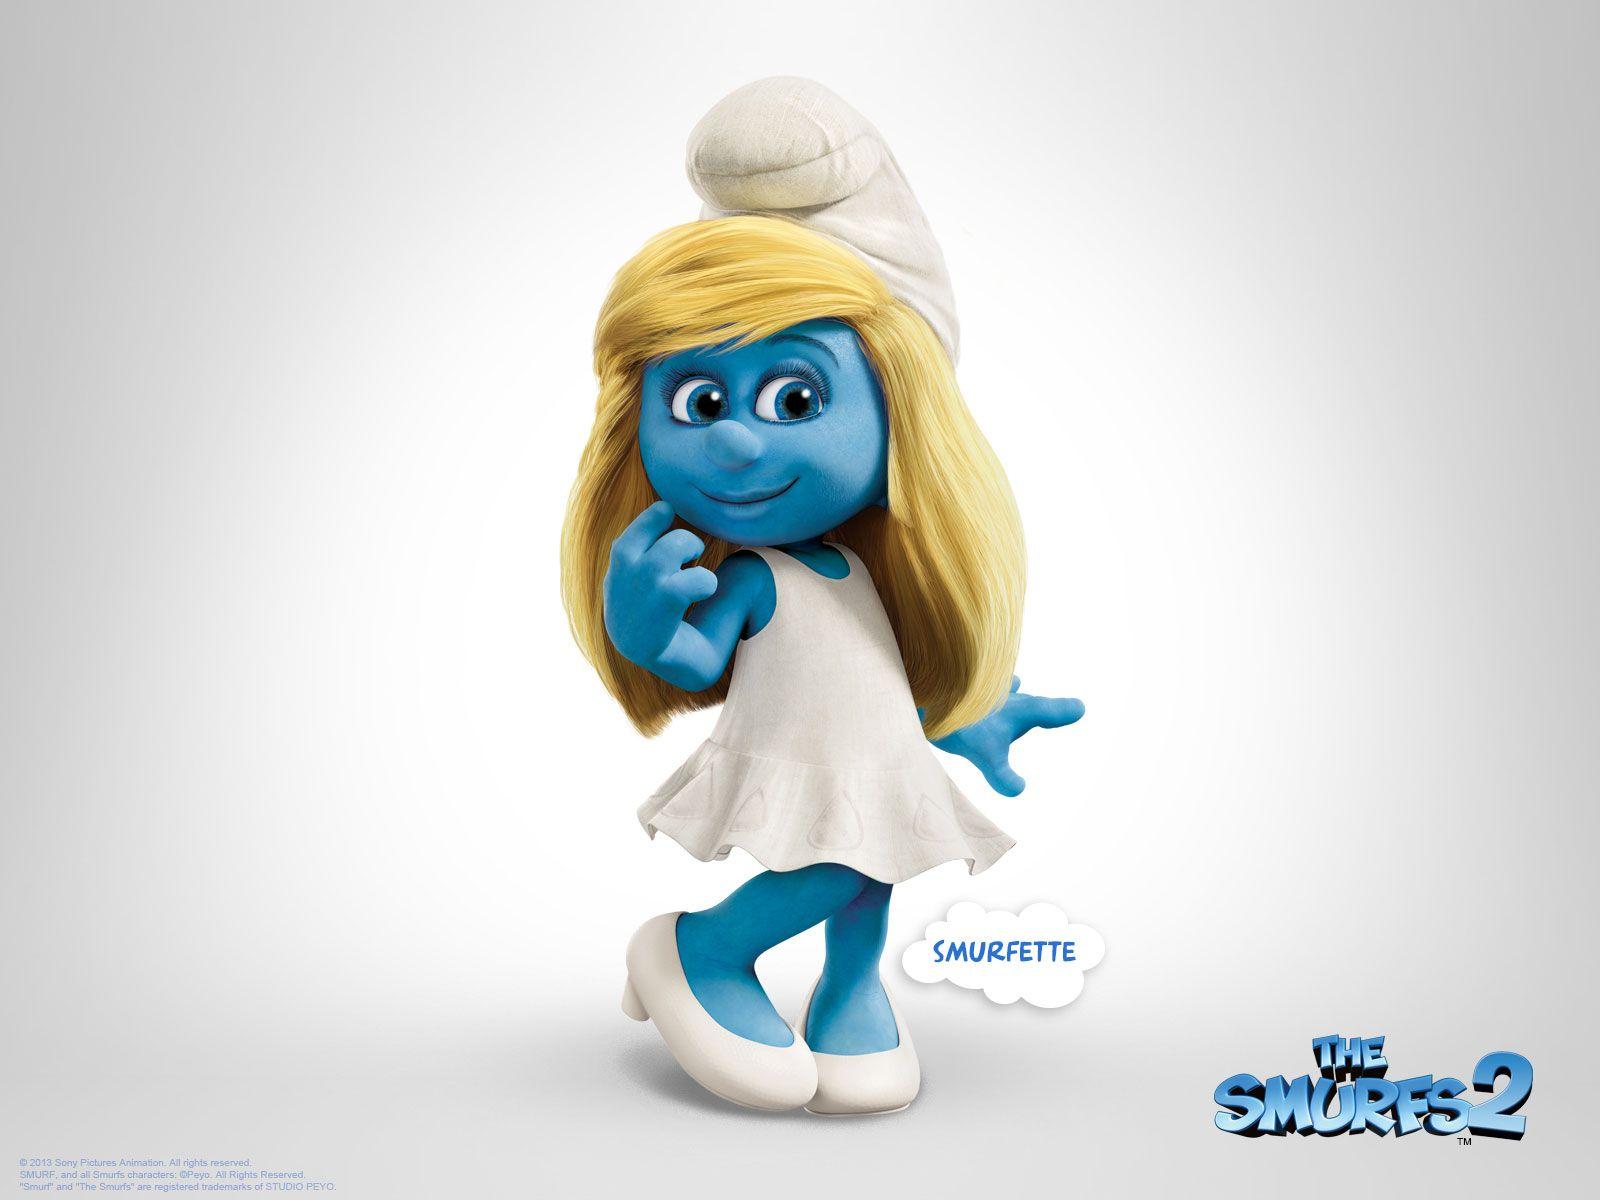 The Smurfs Smurfette Smurf Wallpaper 1600x1200 px Free Download